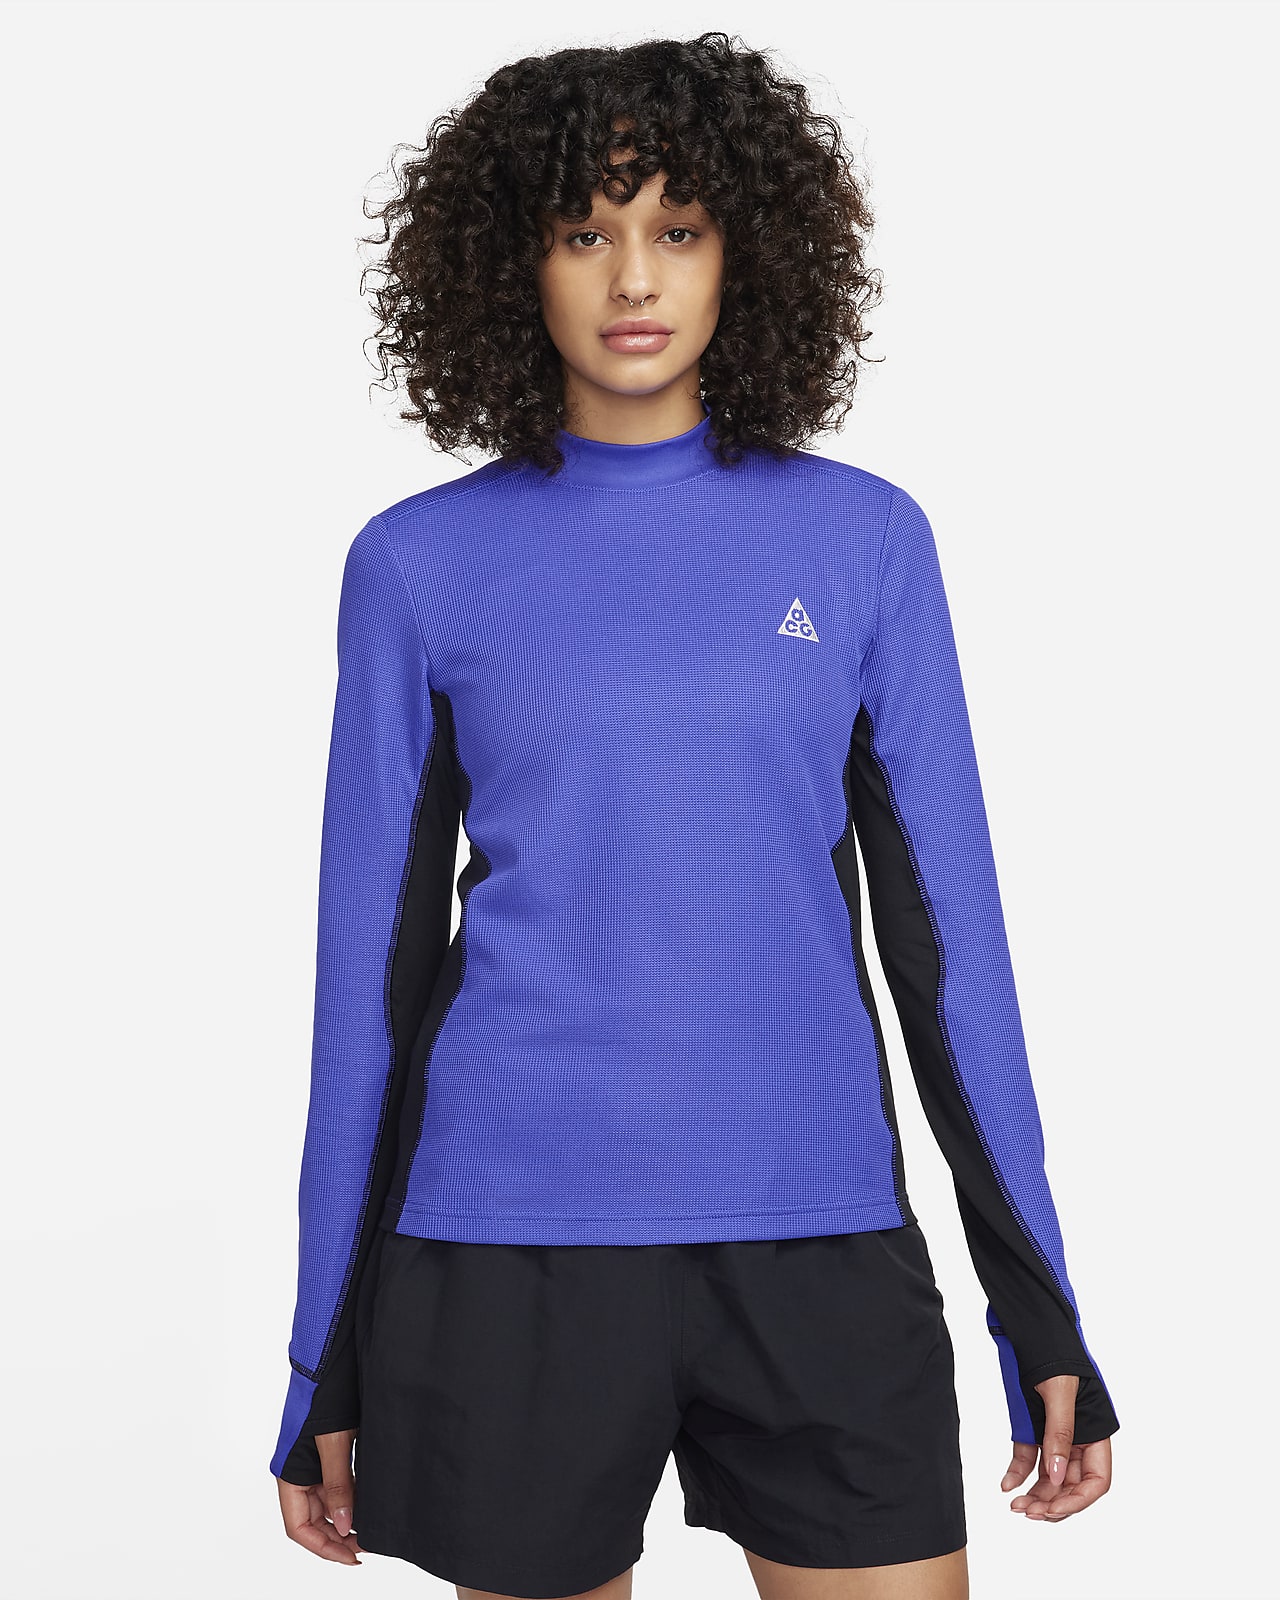 Långärmad tröja Nike ACG Dri-FIT ADV "Goat Rocks" för kvinnor